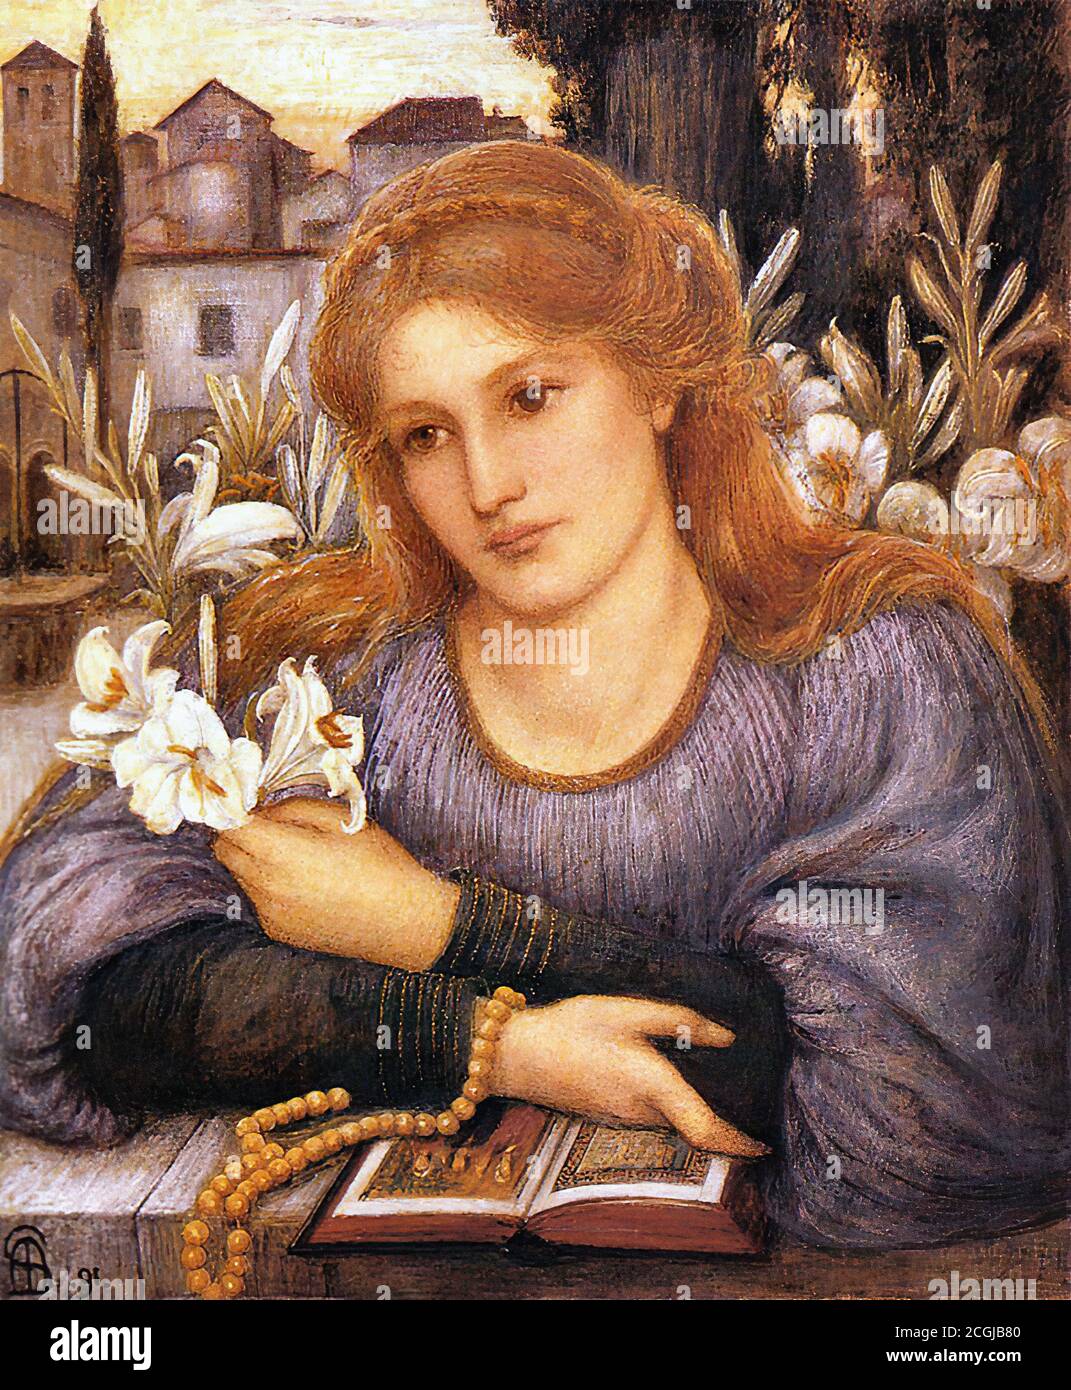 Stillman Marie Spartali - Cloister Lilies - British School - 19e siècle Banque D'Images